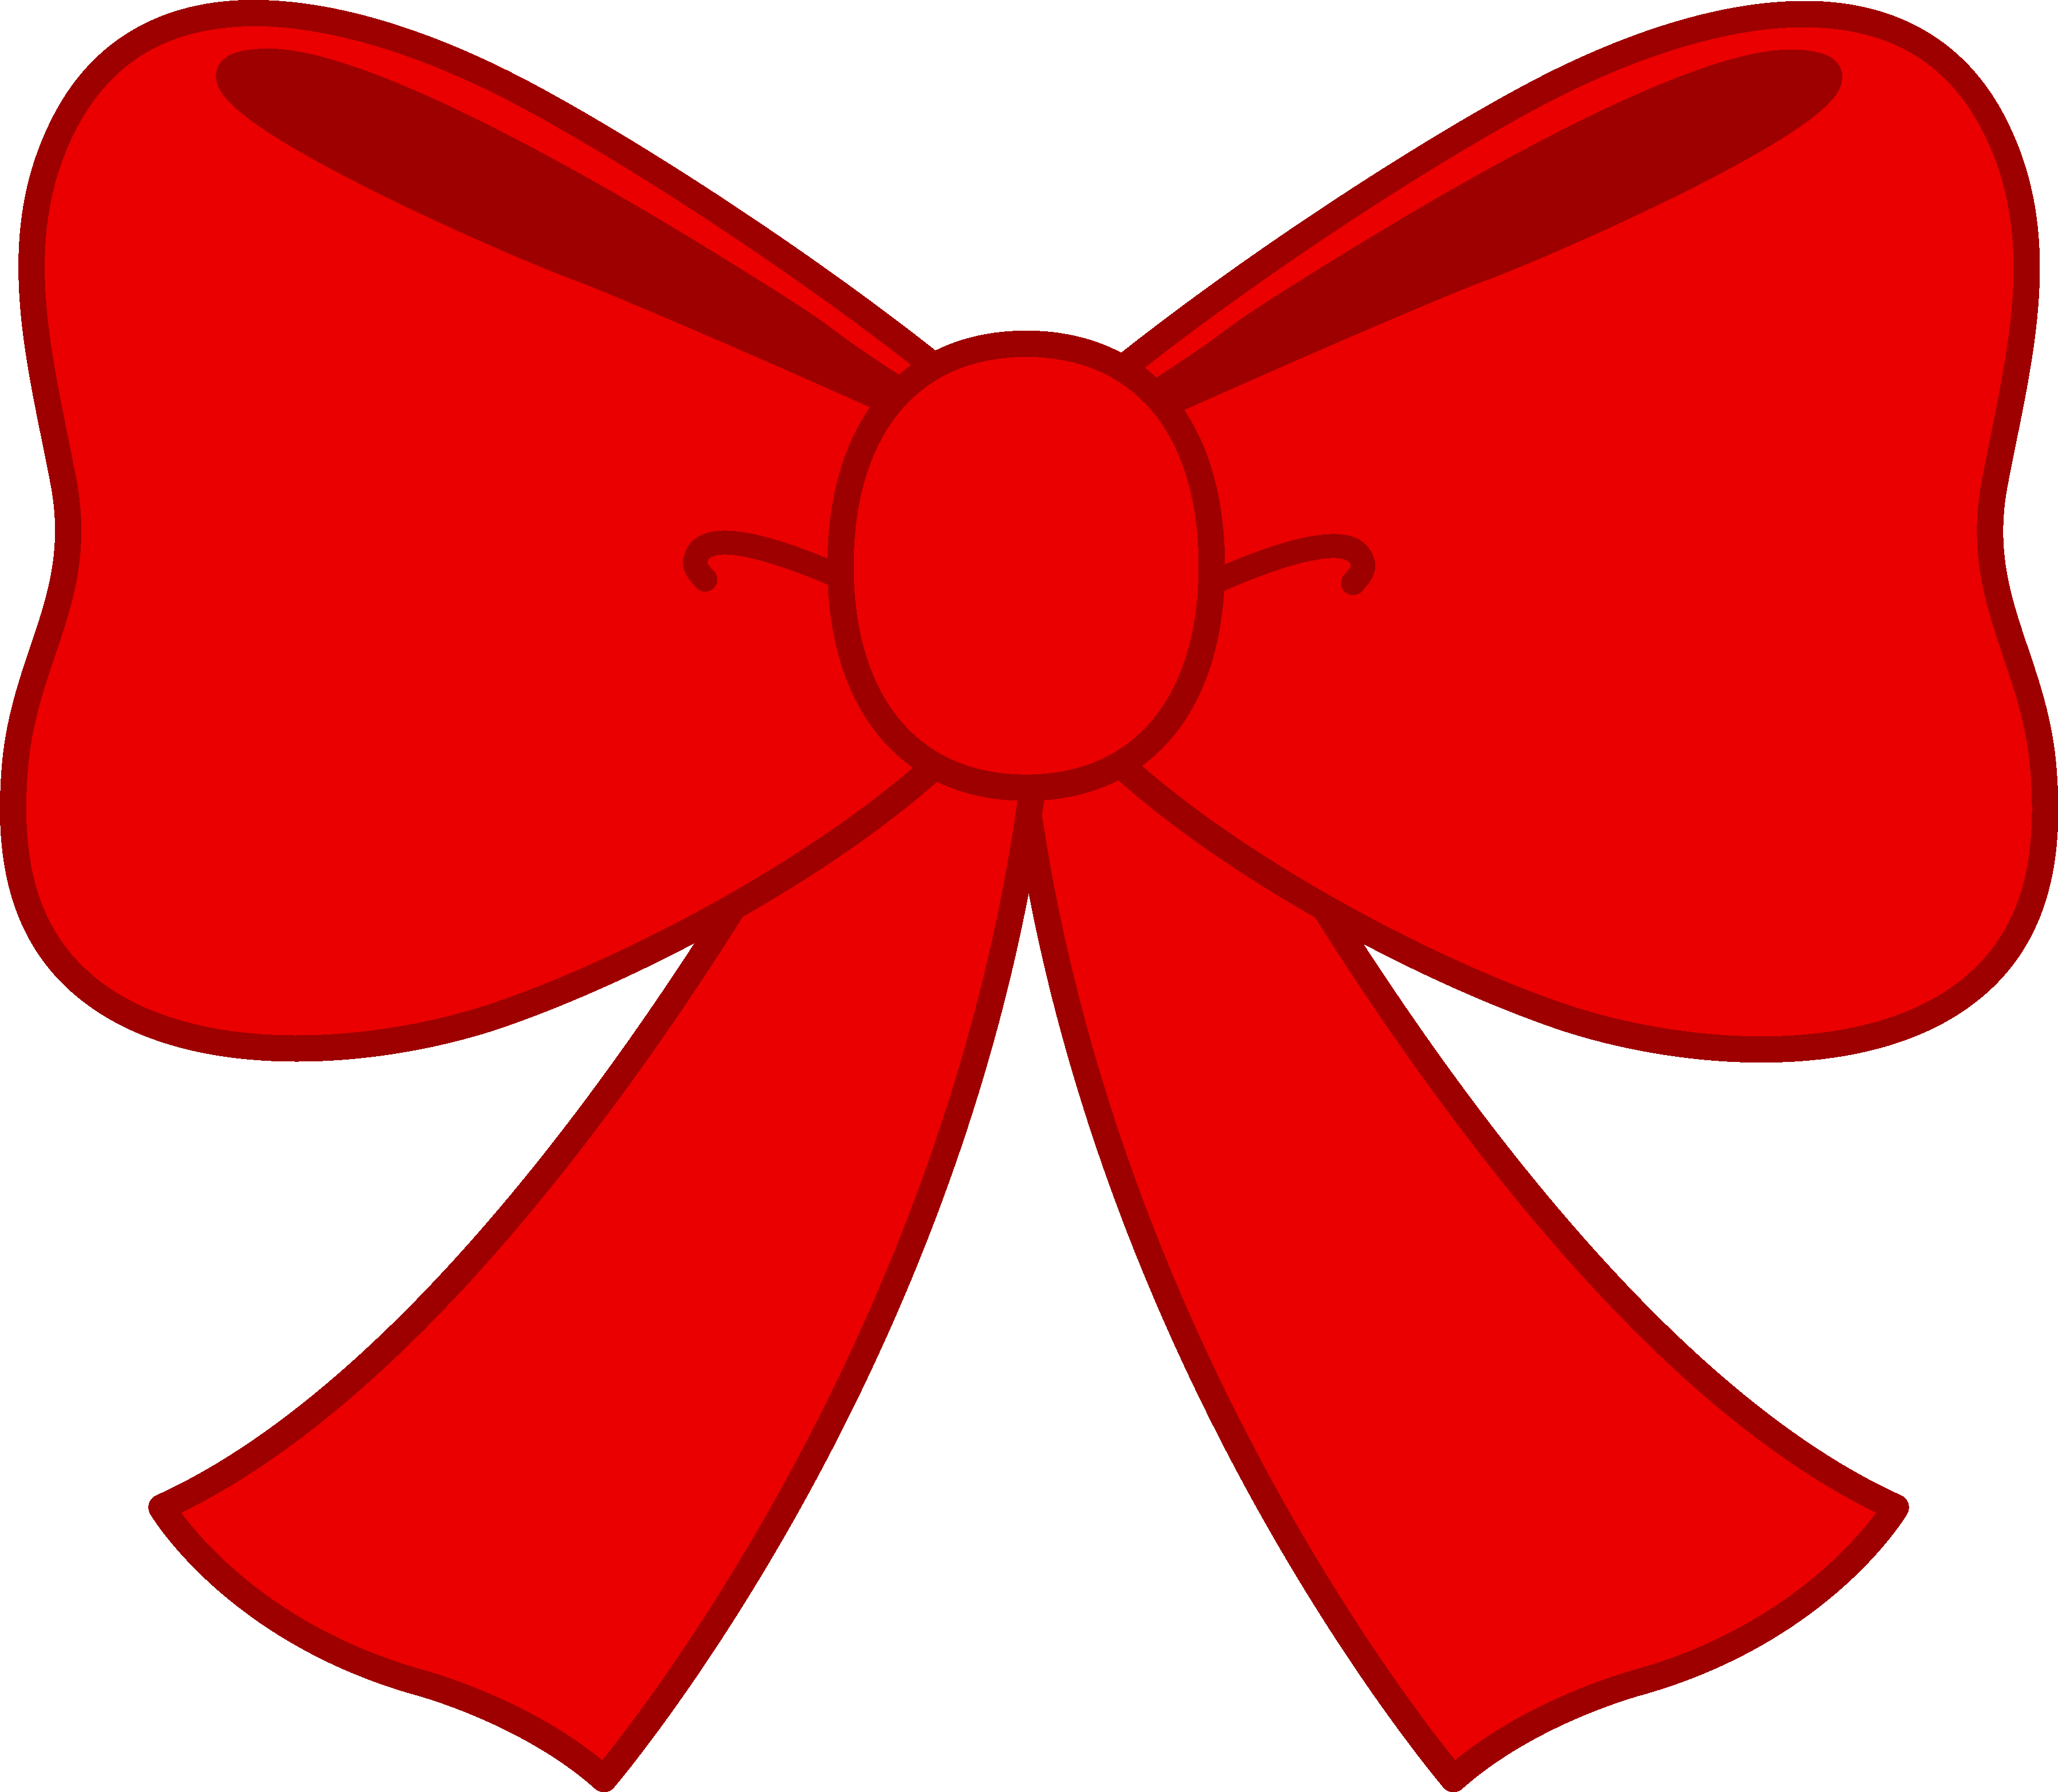 Cute red bow clipart free clip art